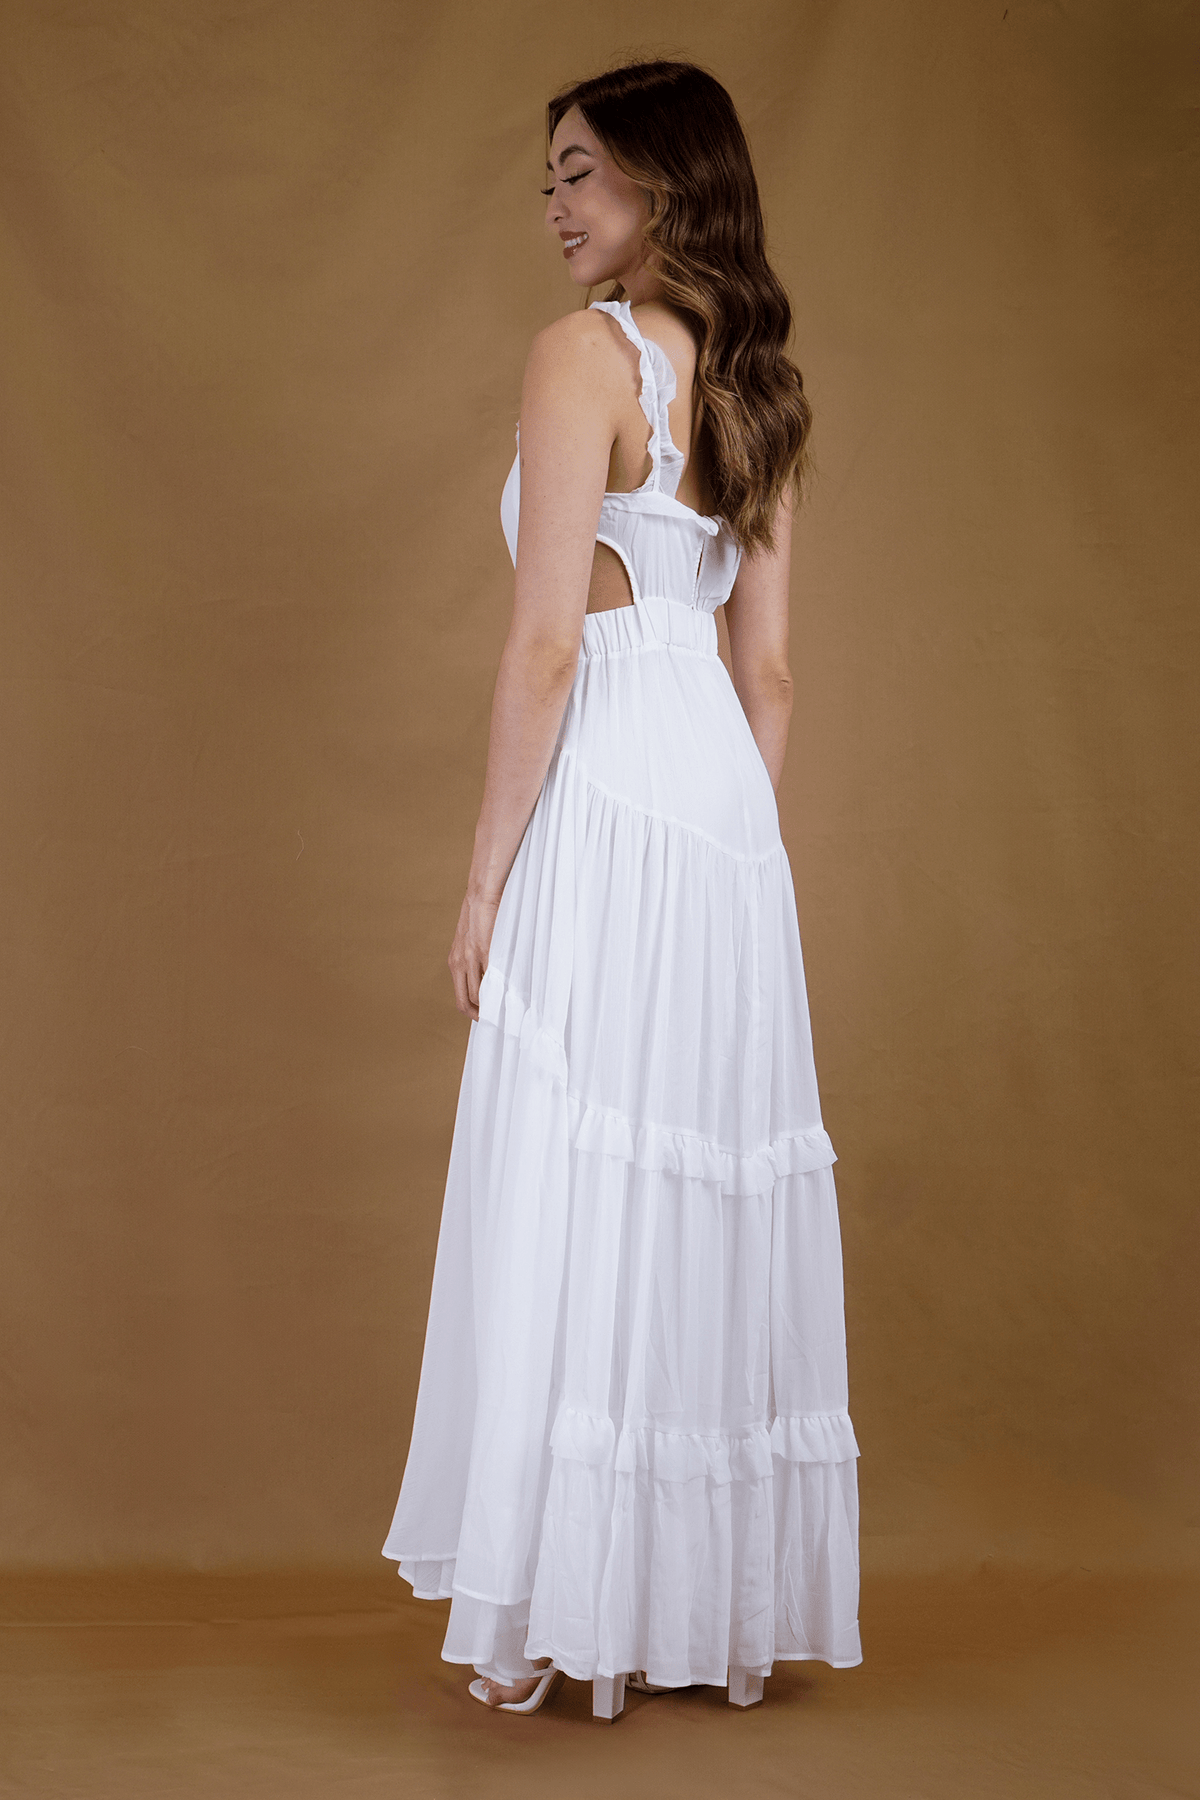 Chloe Dao Boutique DRESSES Off White Chiffon Maxi Dress